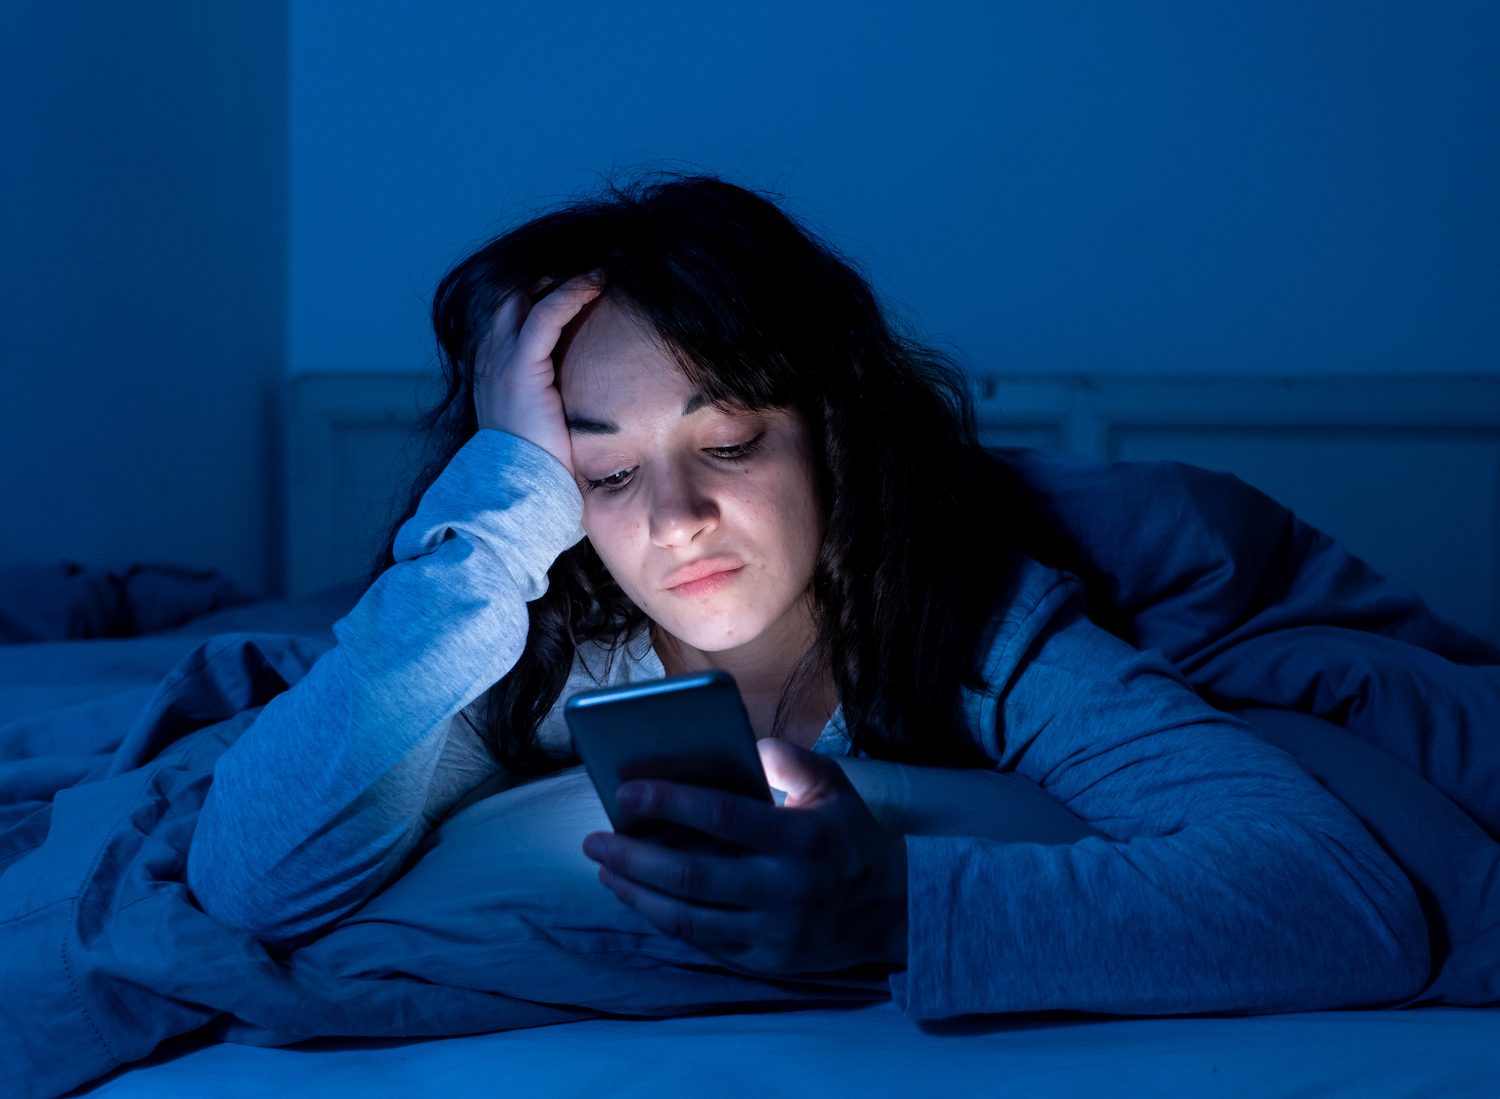 Phone Usage at Night Decreases Sleep Quality